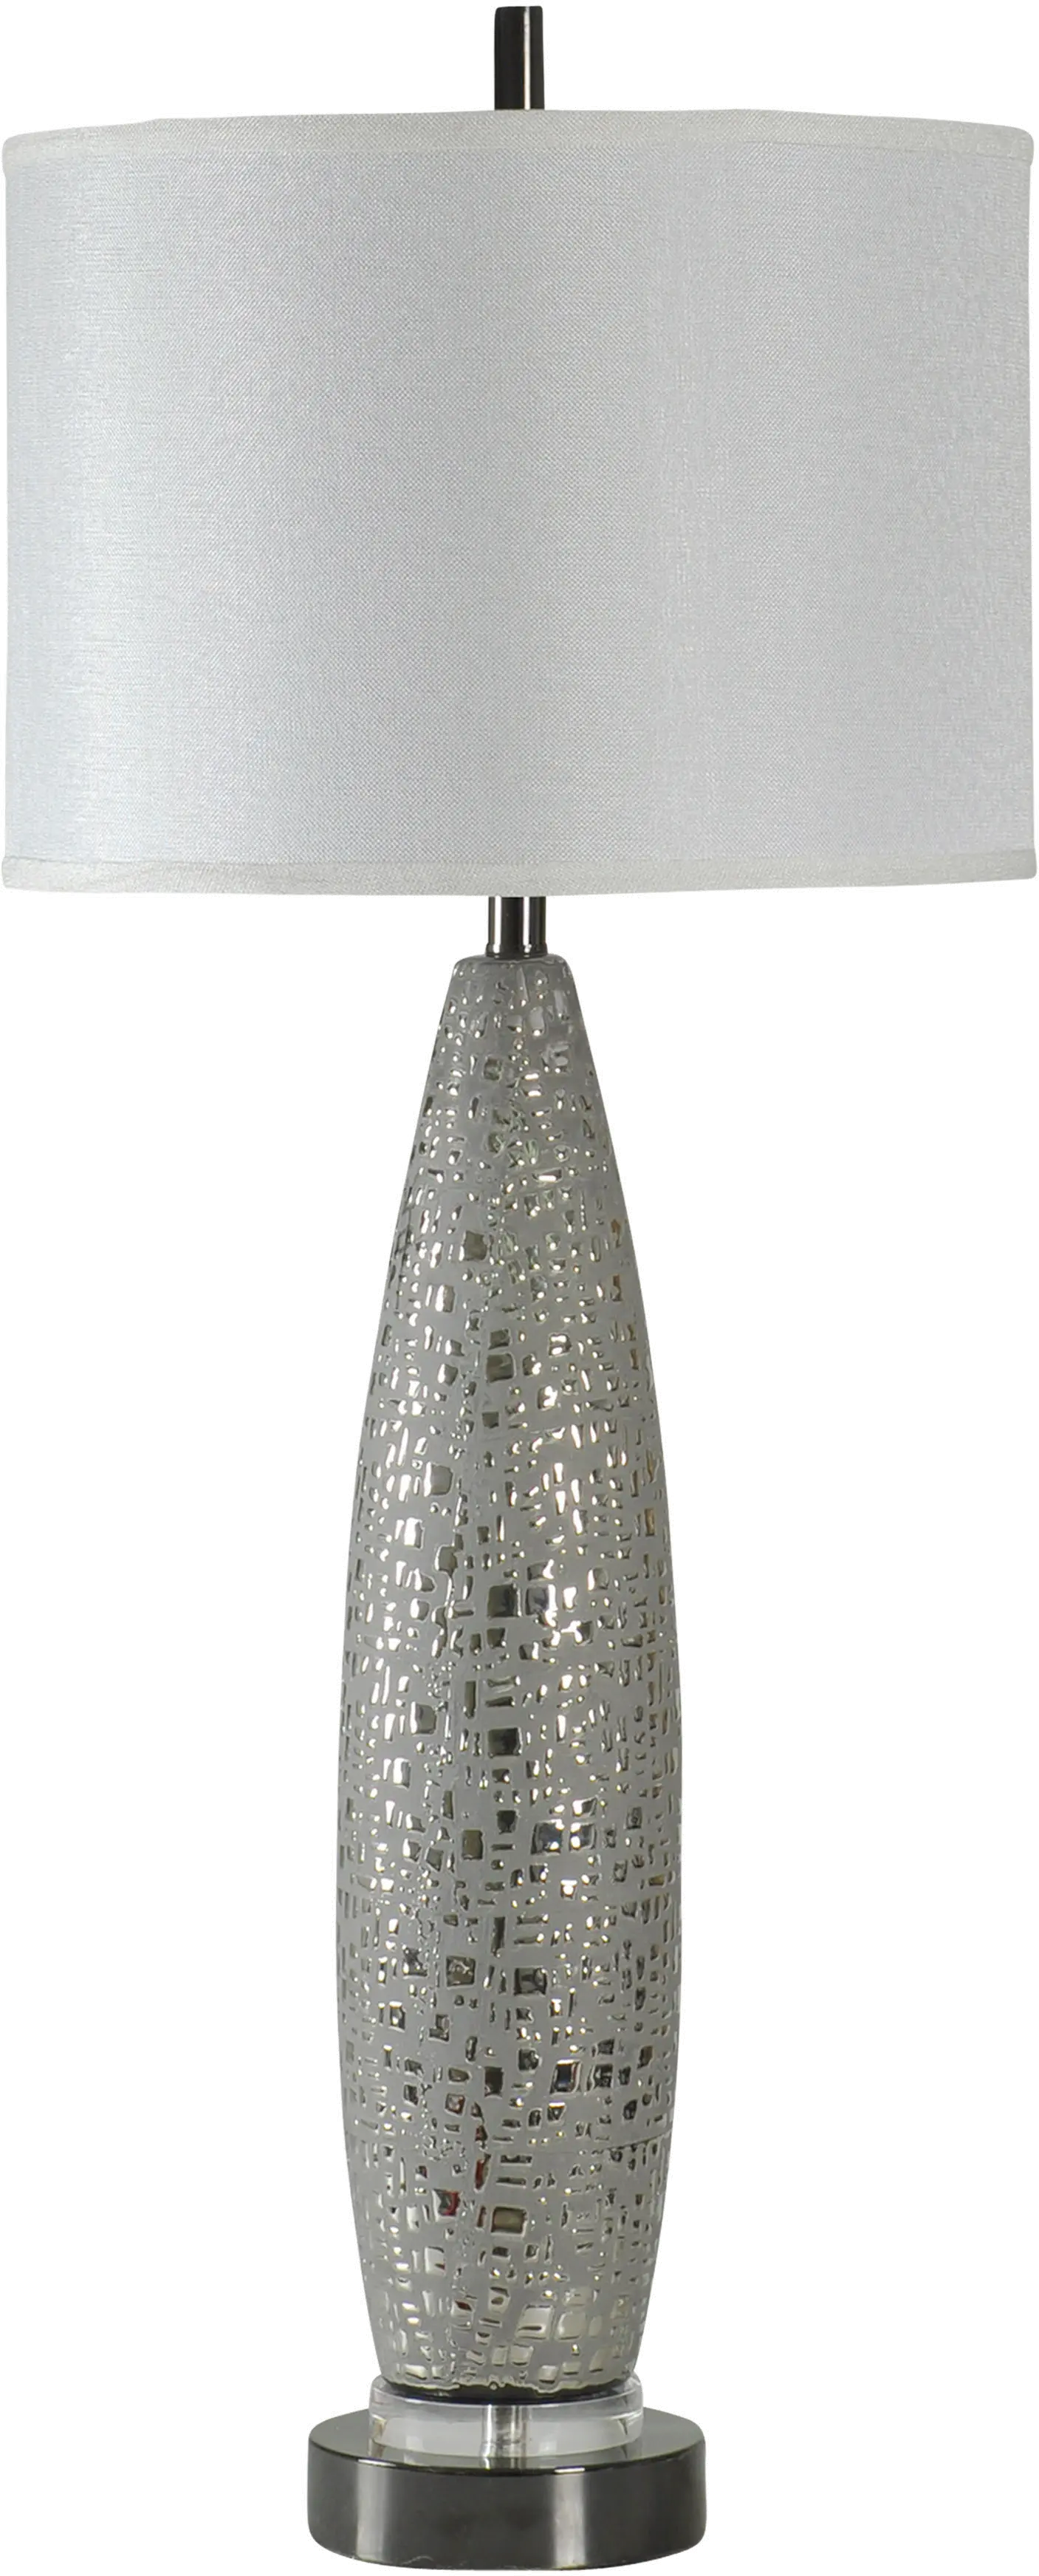 Metallic Ceramic Table Lamp with Acrylic Base